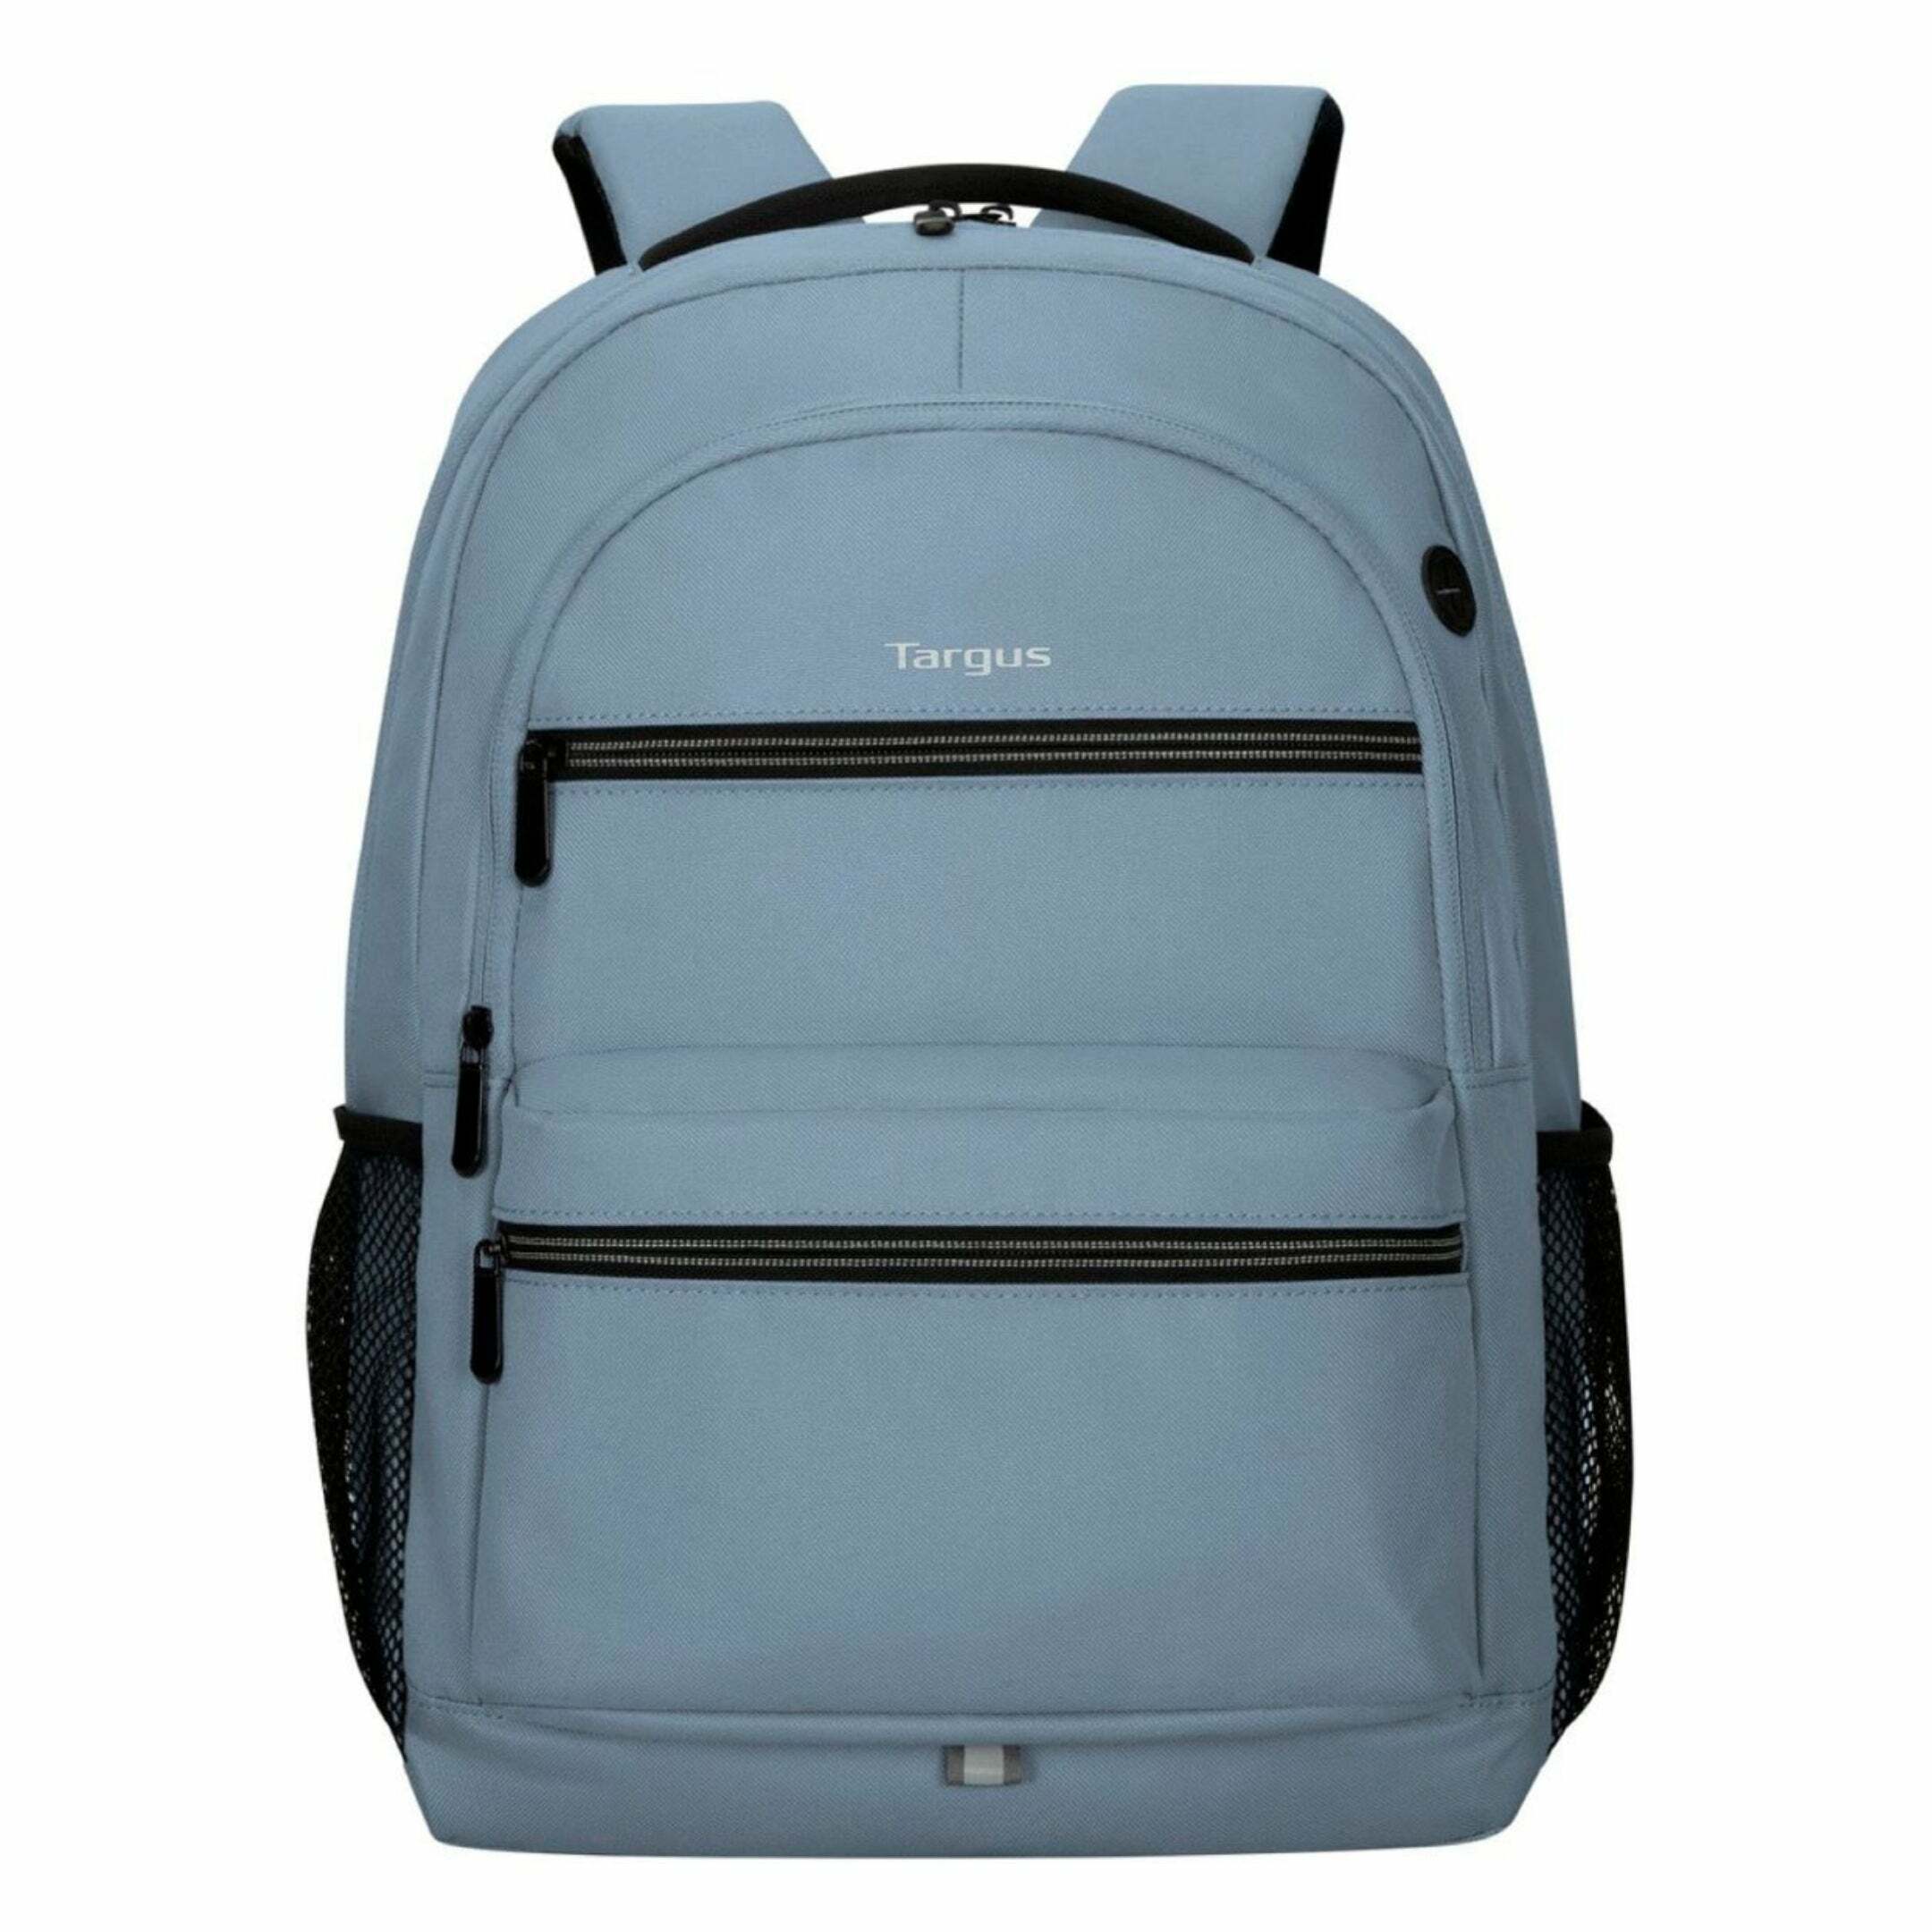 Targus Octave II Backpack for 15.6” Laptops - Ergonomic and Reflective Design, Blue